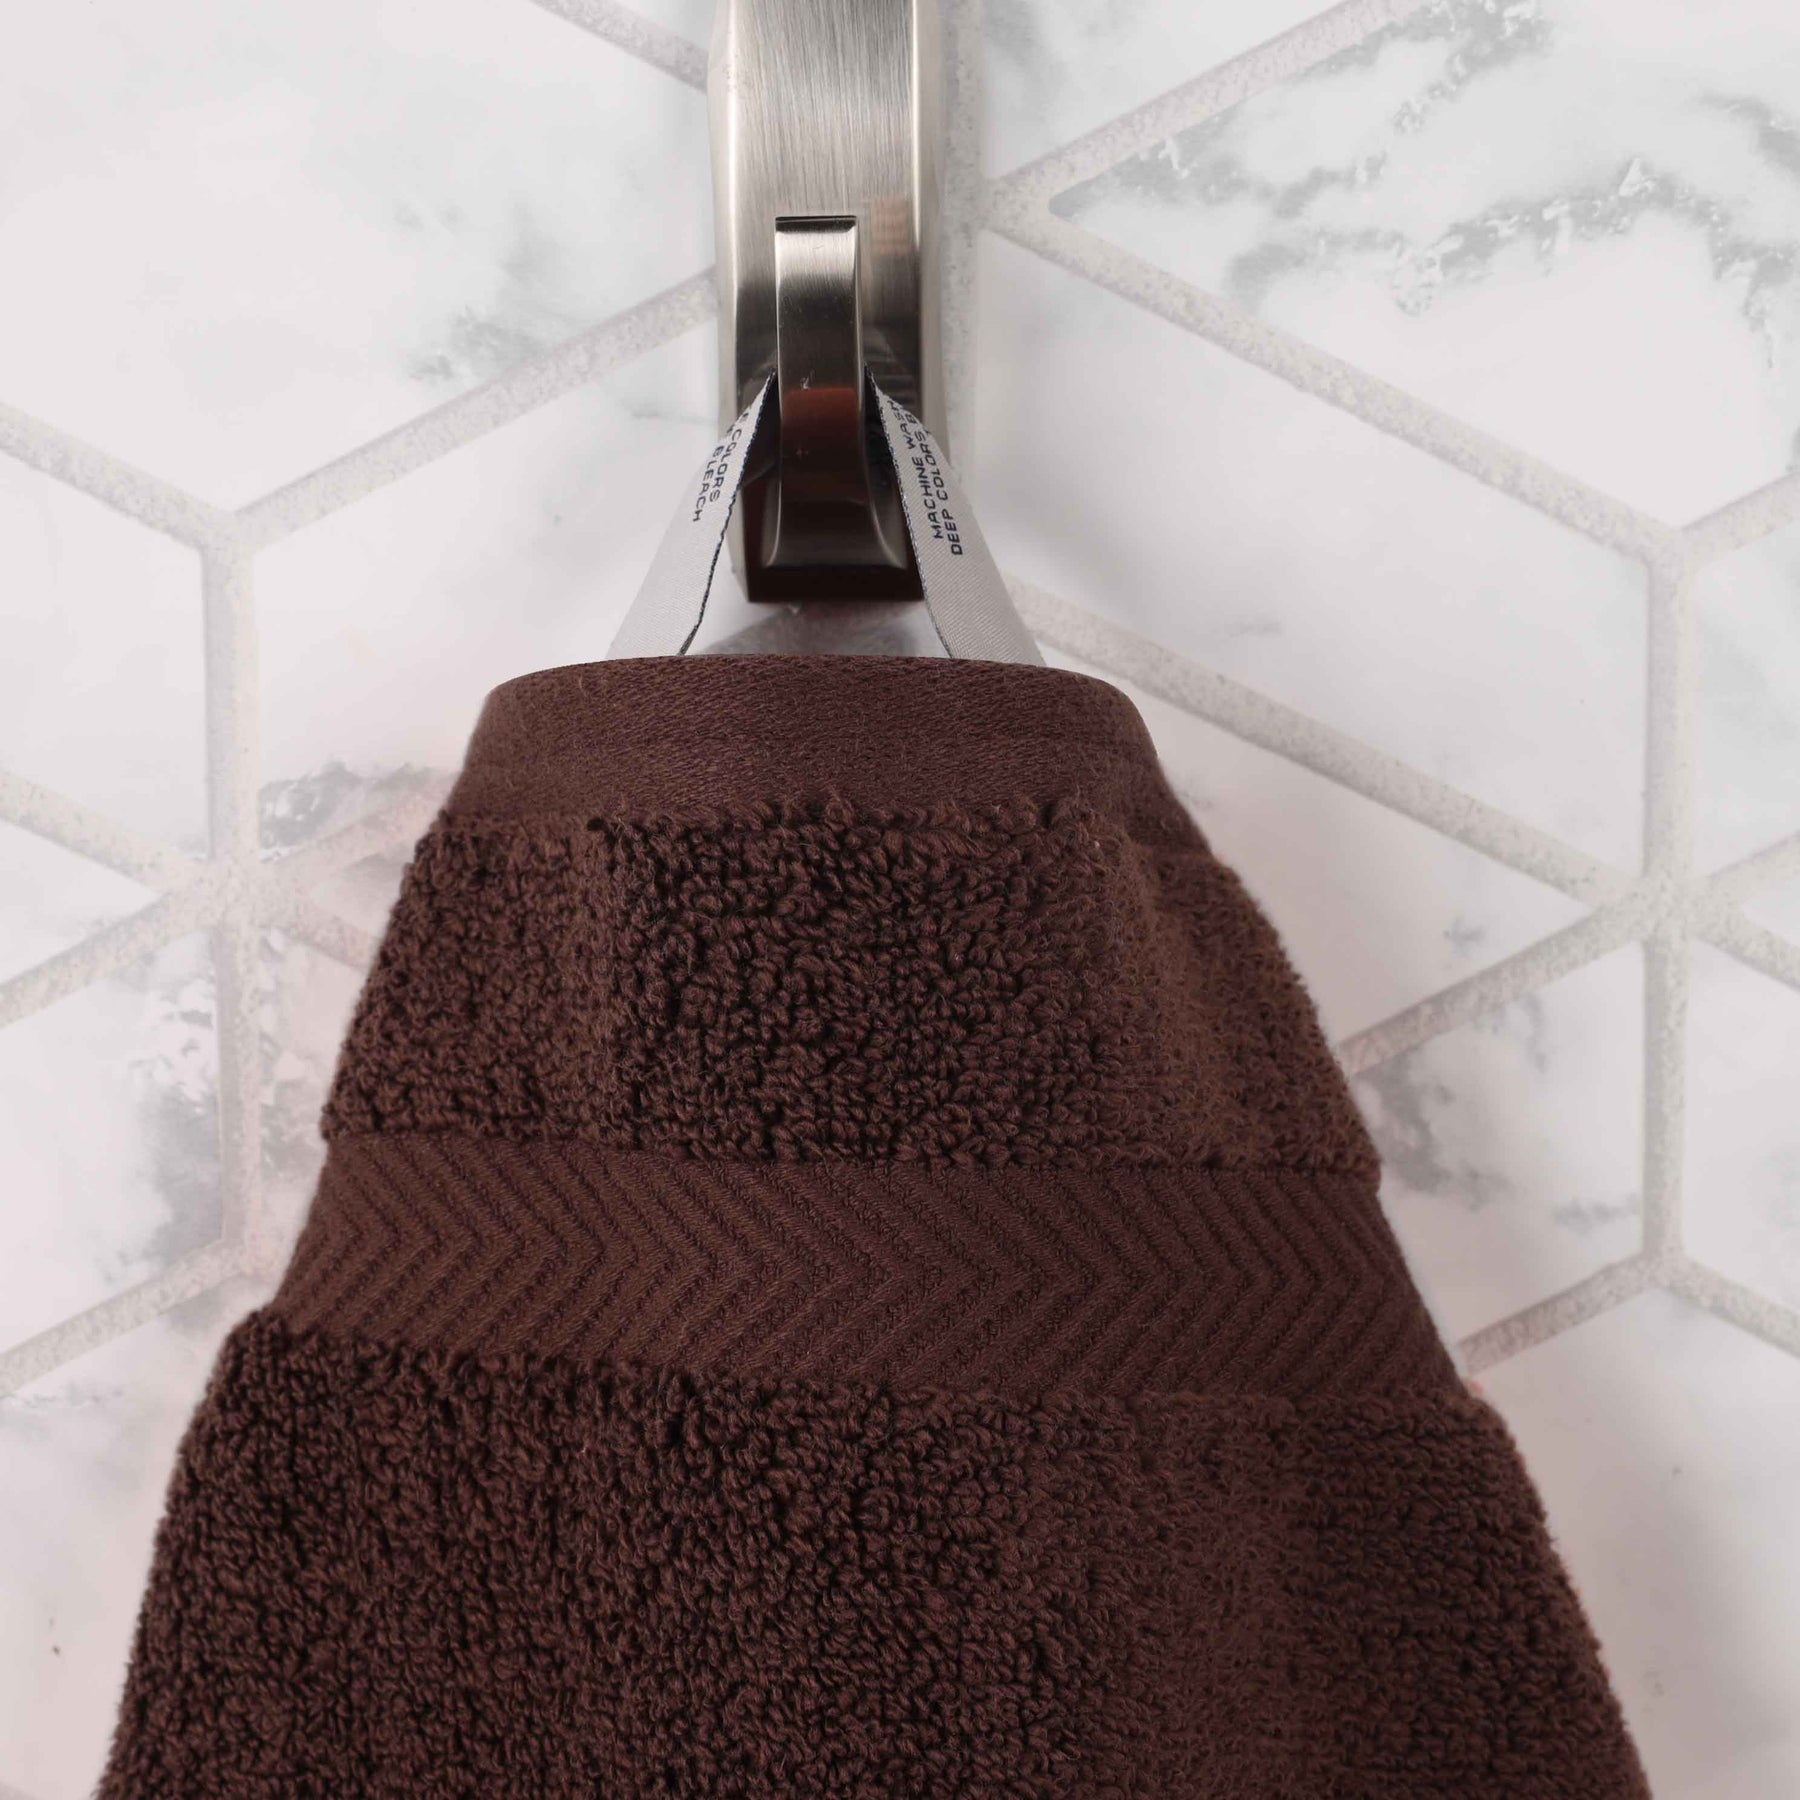 Zero-Twist Cotton Quick-Drying Absorbent Assorted 6 Piece Towel Set - Espresso